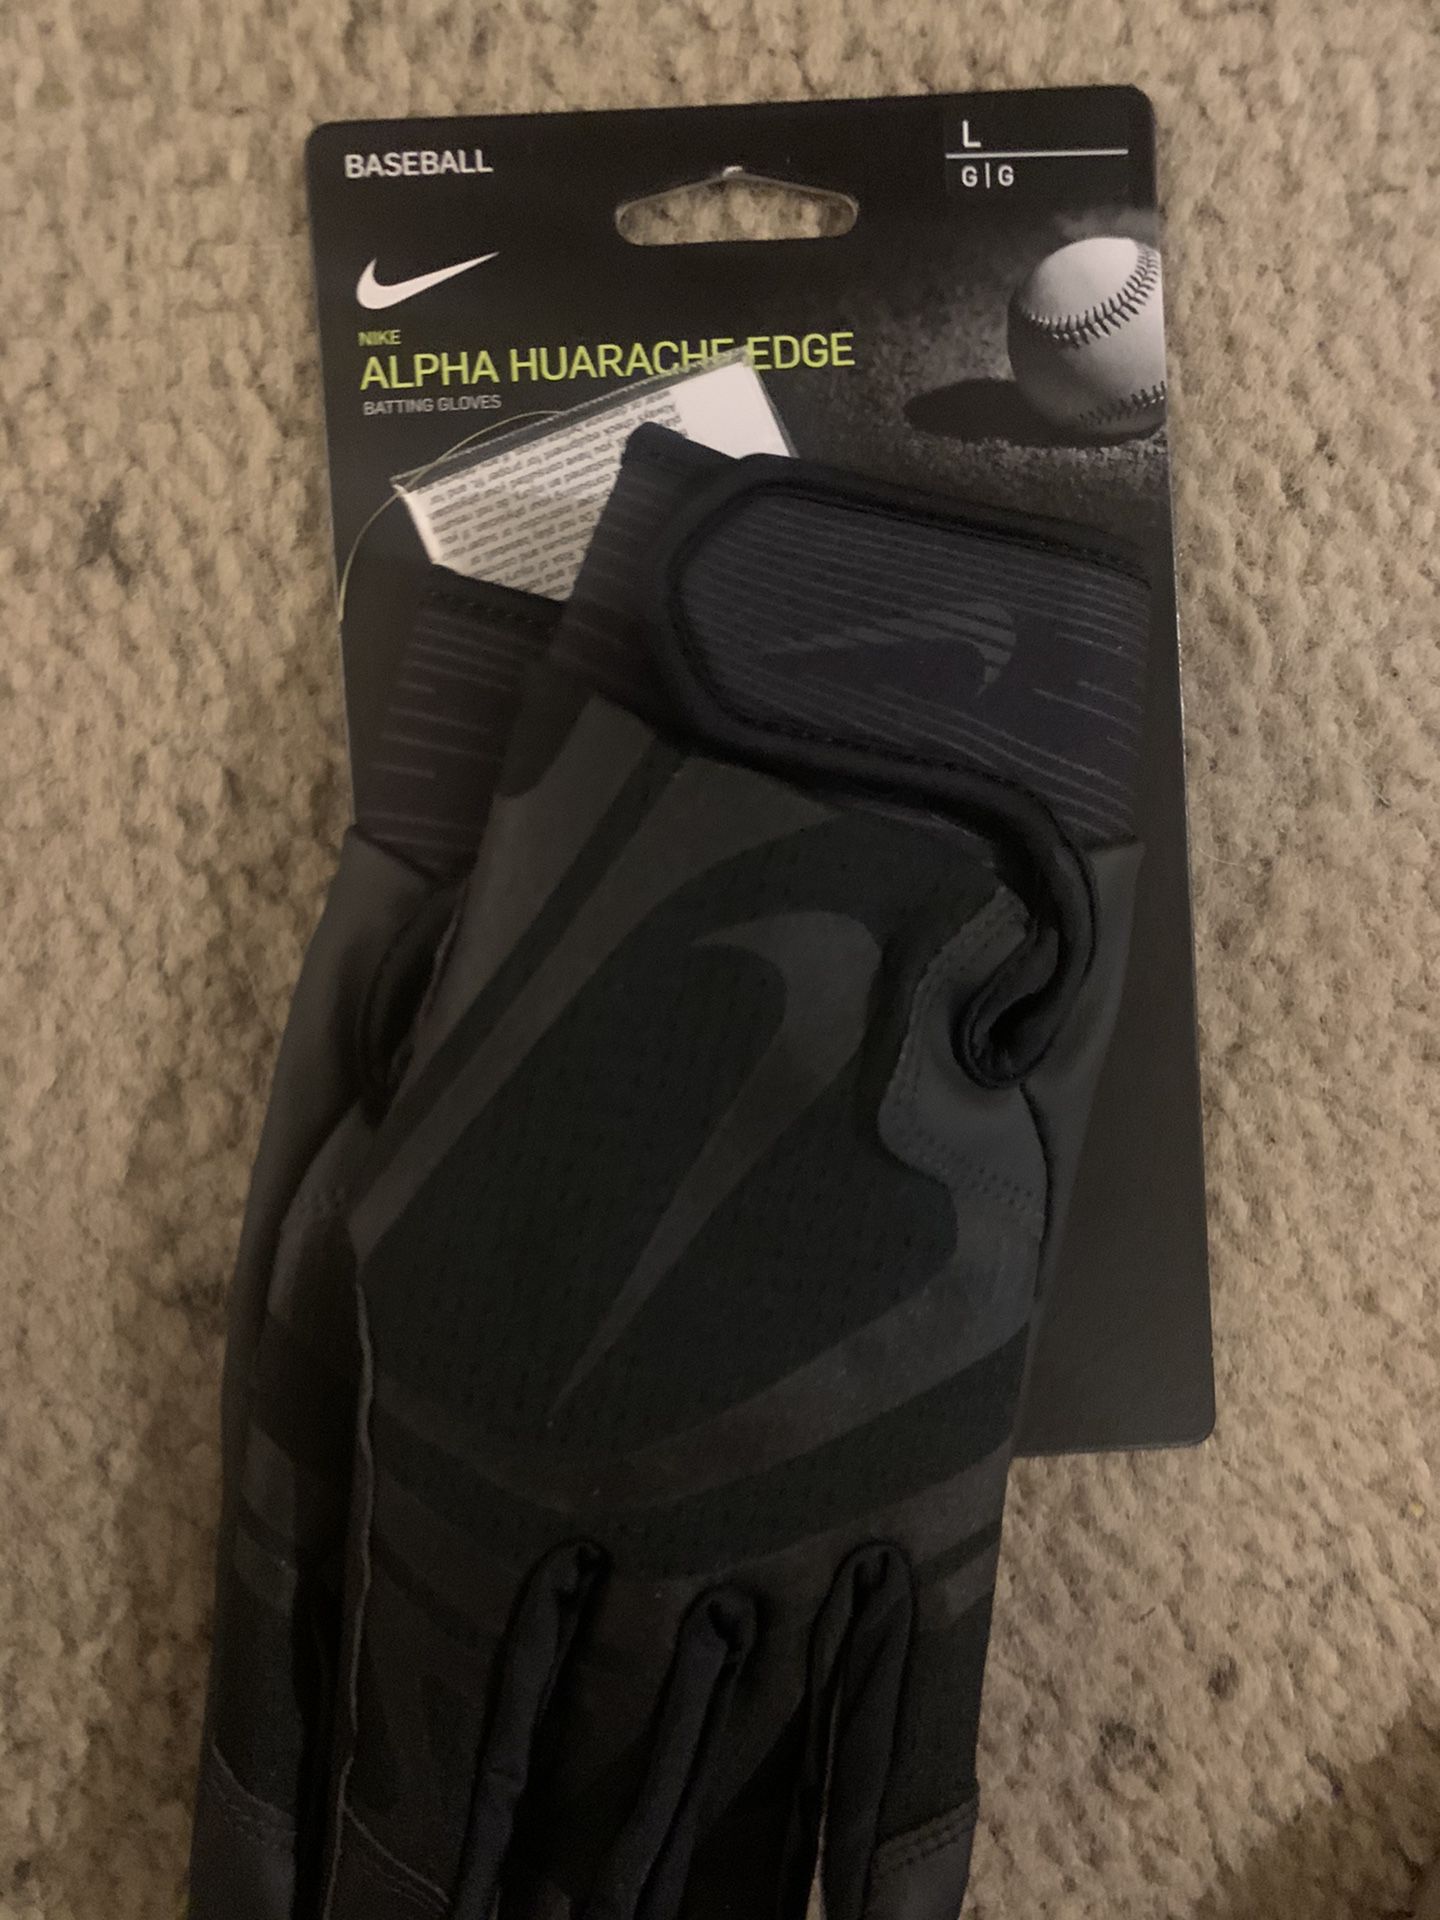 Nike alpha huarache edge baseball batting gloves size Large